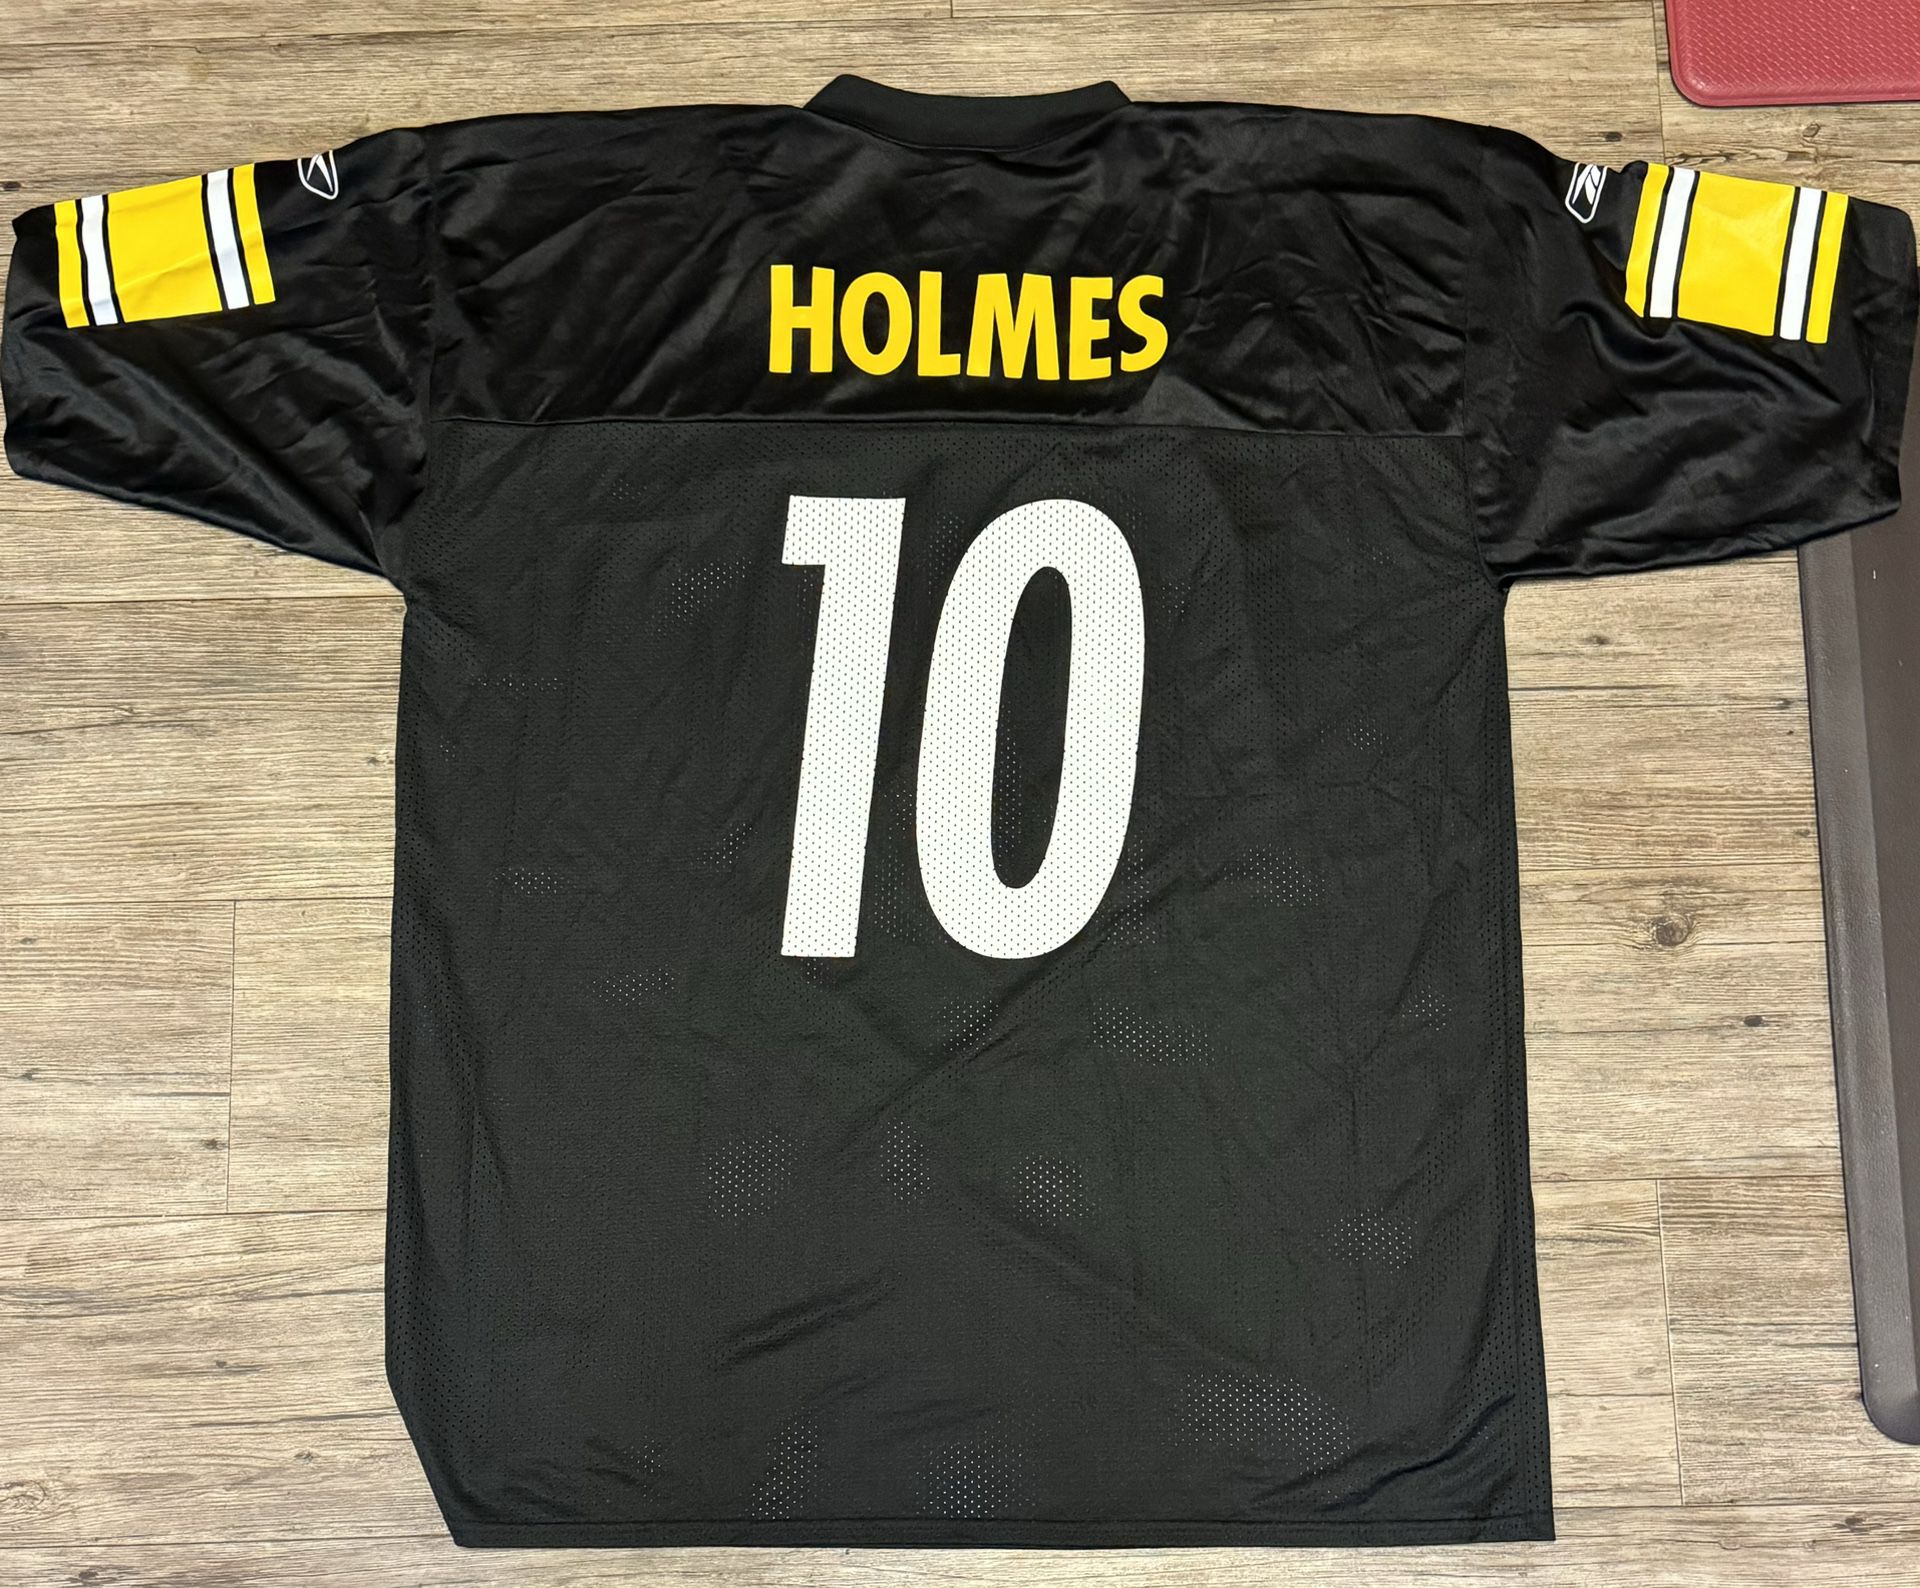 Pittsburgh Steelers Reebok #10 Santonio Holmes Reebok Jersey. Steelers. First Round Pick 2006. XLIII Super Bowl MVP. Men’s XL $30.00